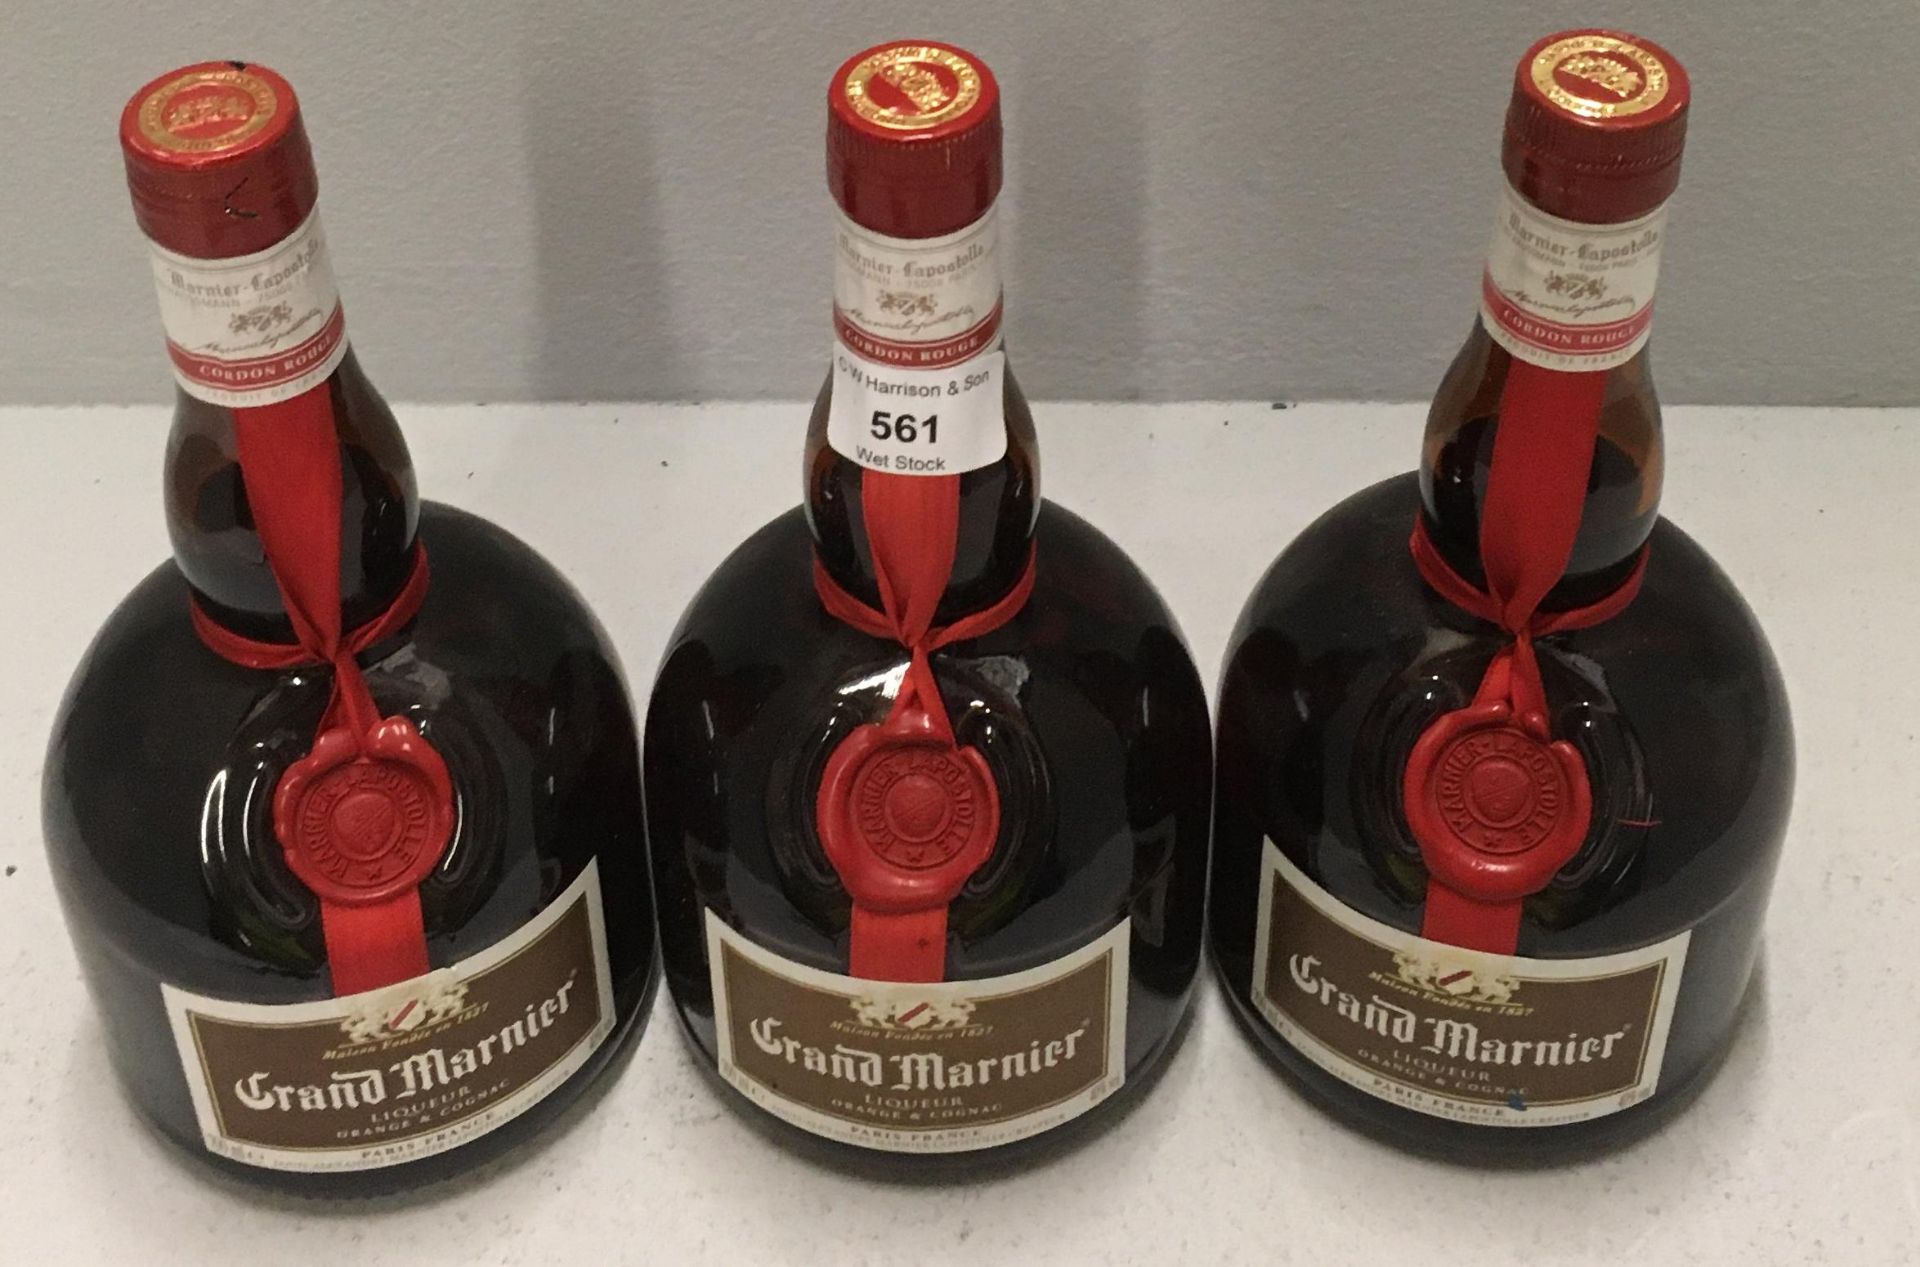 3 x 700ml bottles of Grand Marnier orange and cognac liqueur